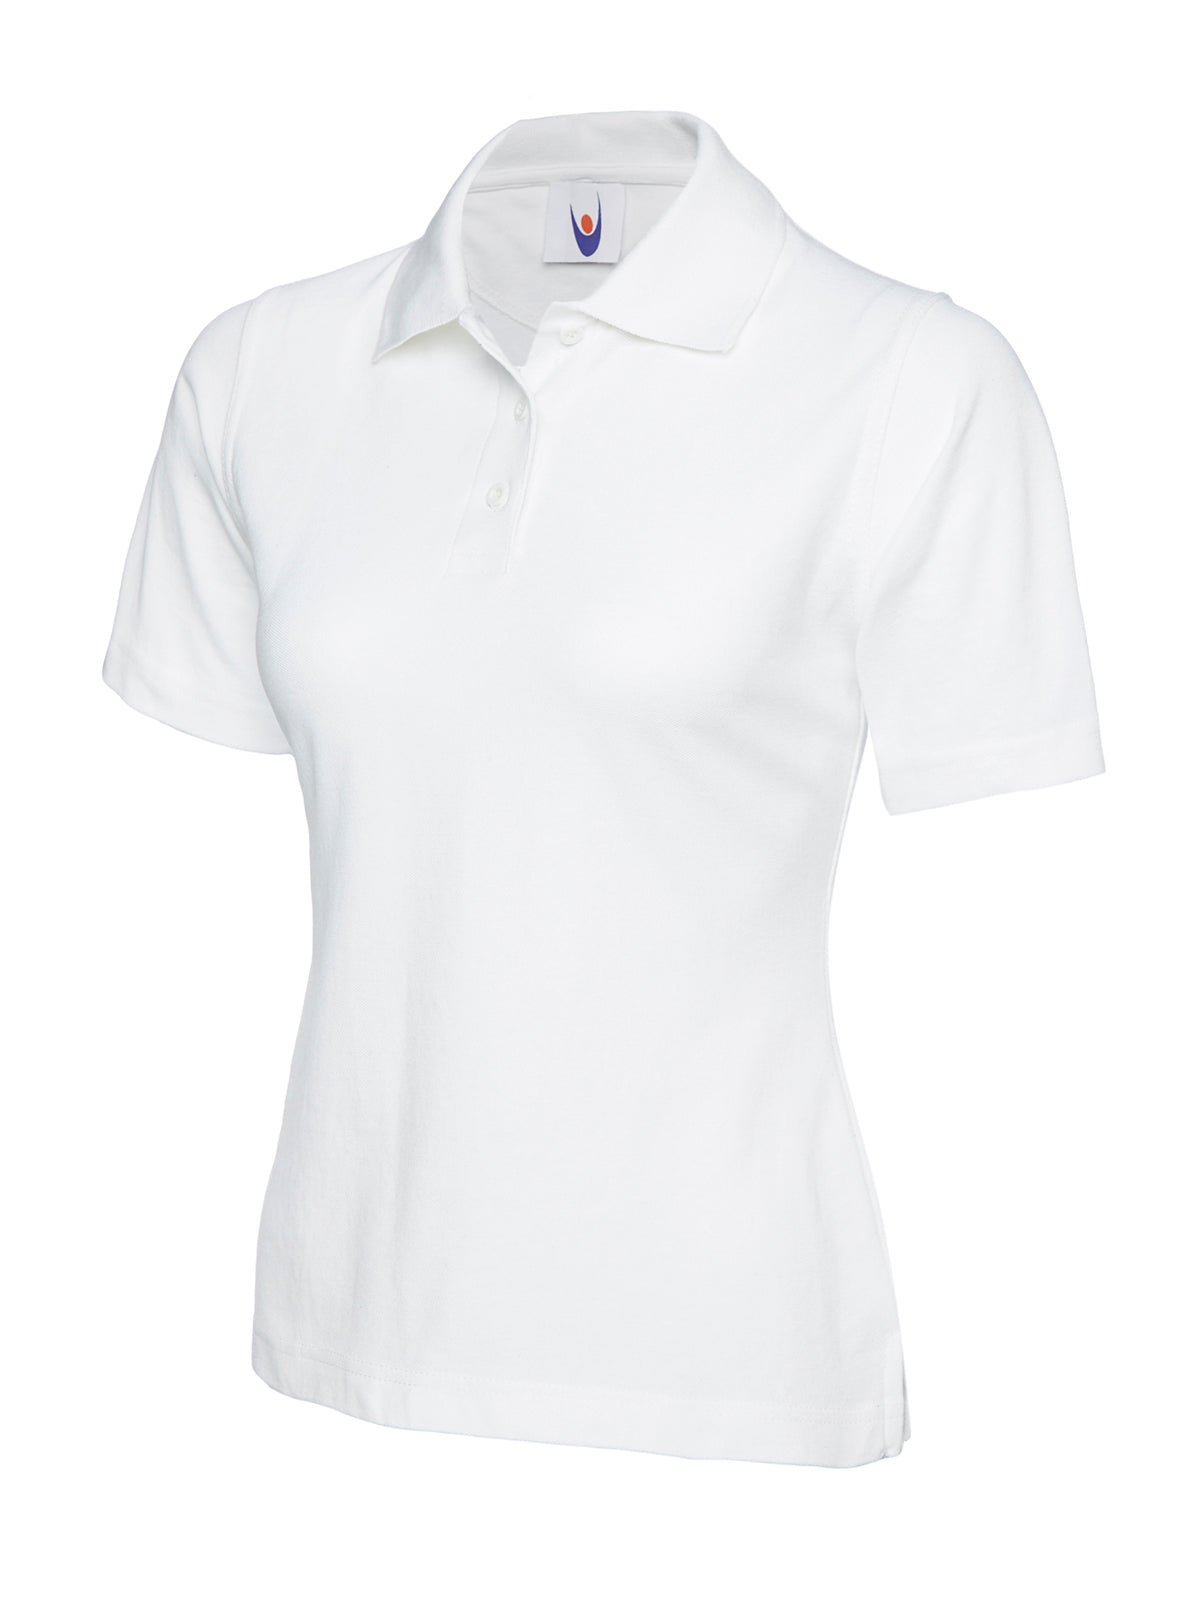 Uneek Ladies Classic Poloshirt - White